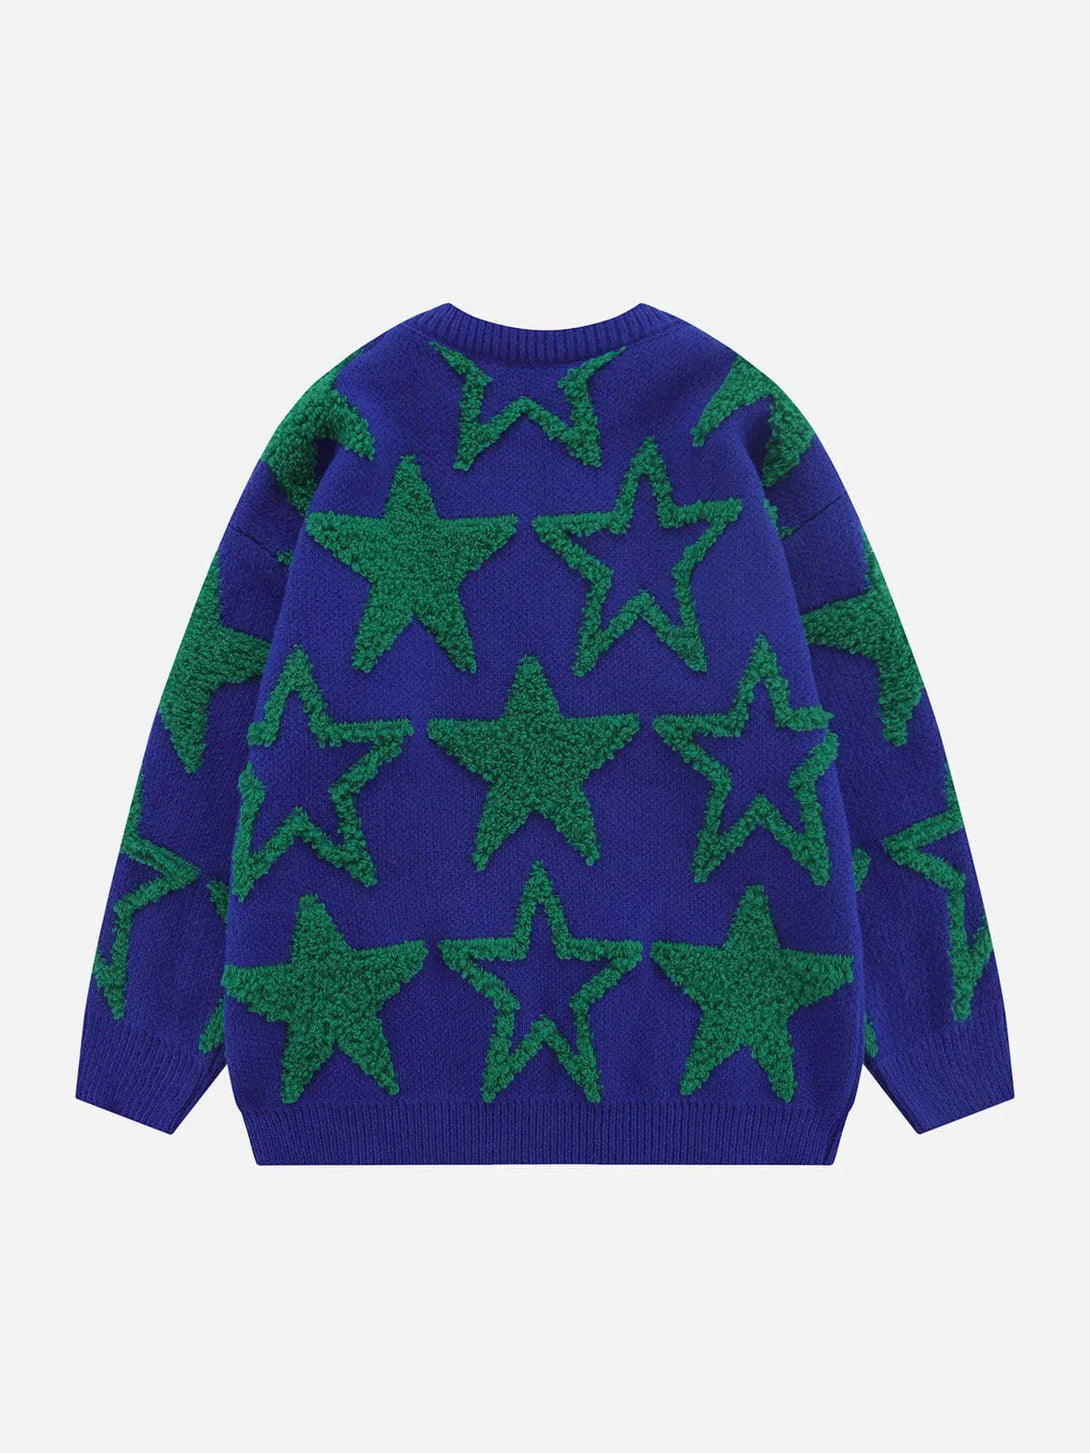 Majesda® - Flocked Star Sweater outfit ideas streetwear fashion